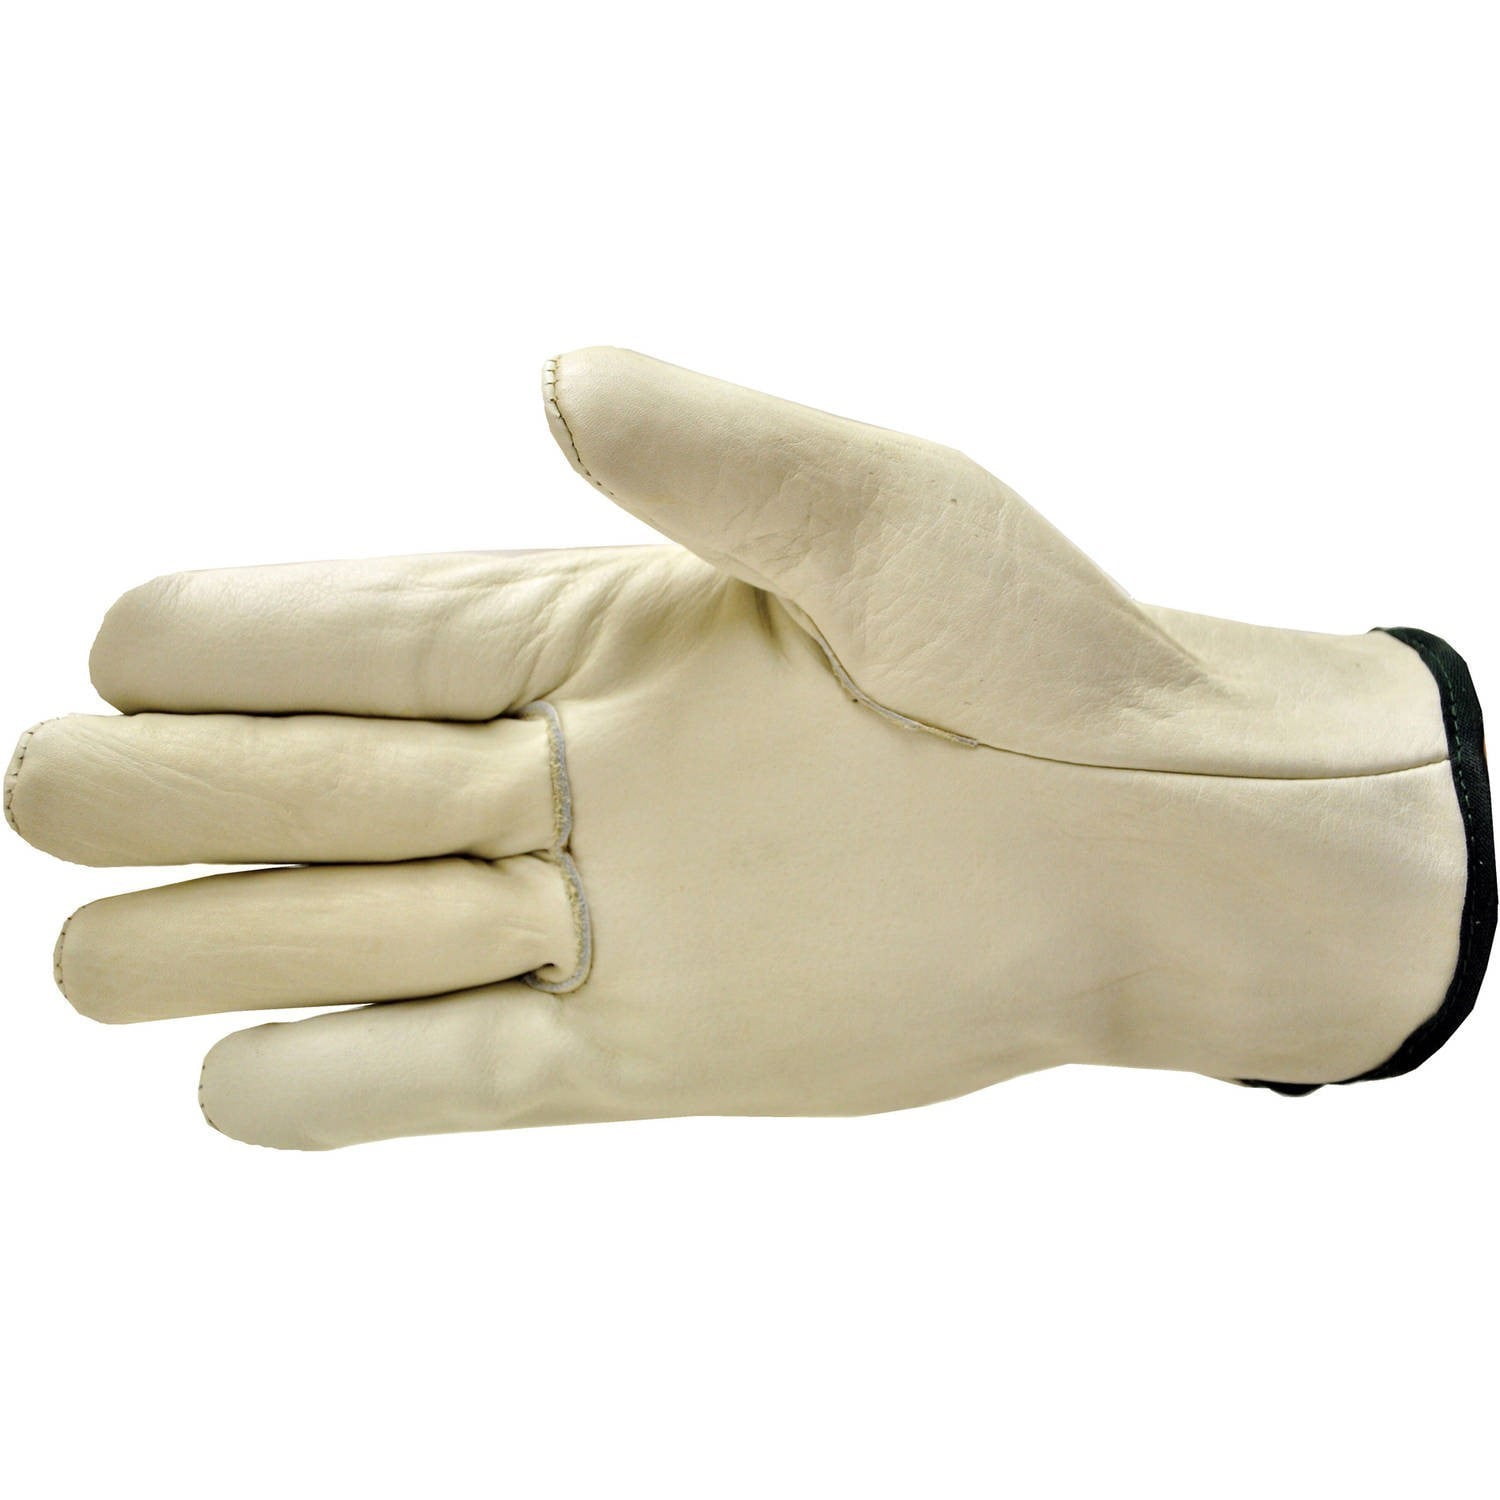 Box Handler Gloves Black, Large, Pair 